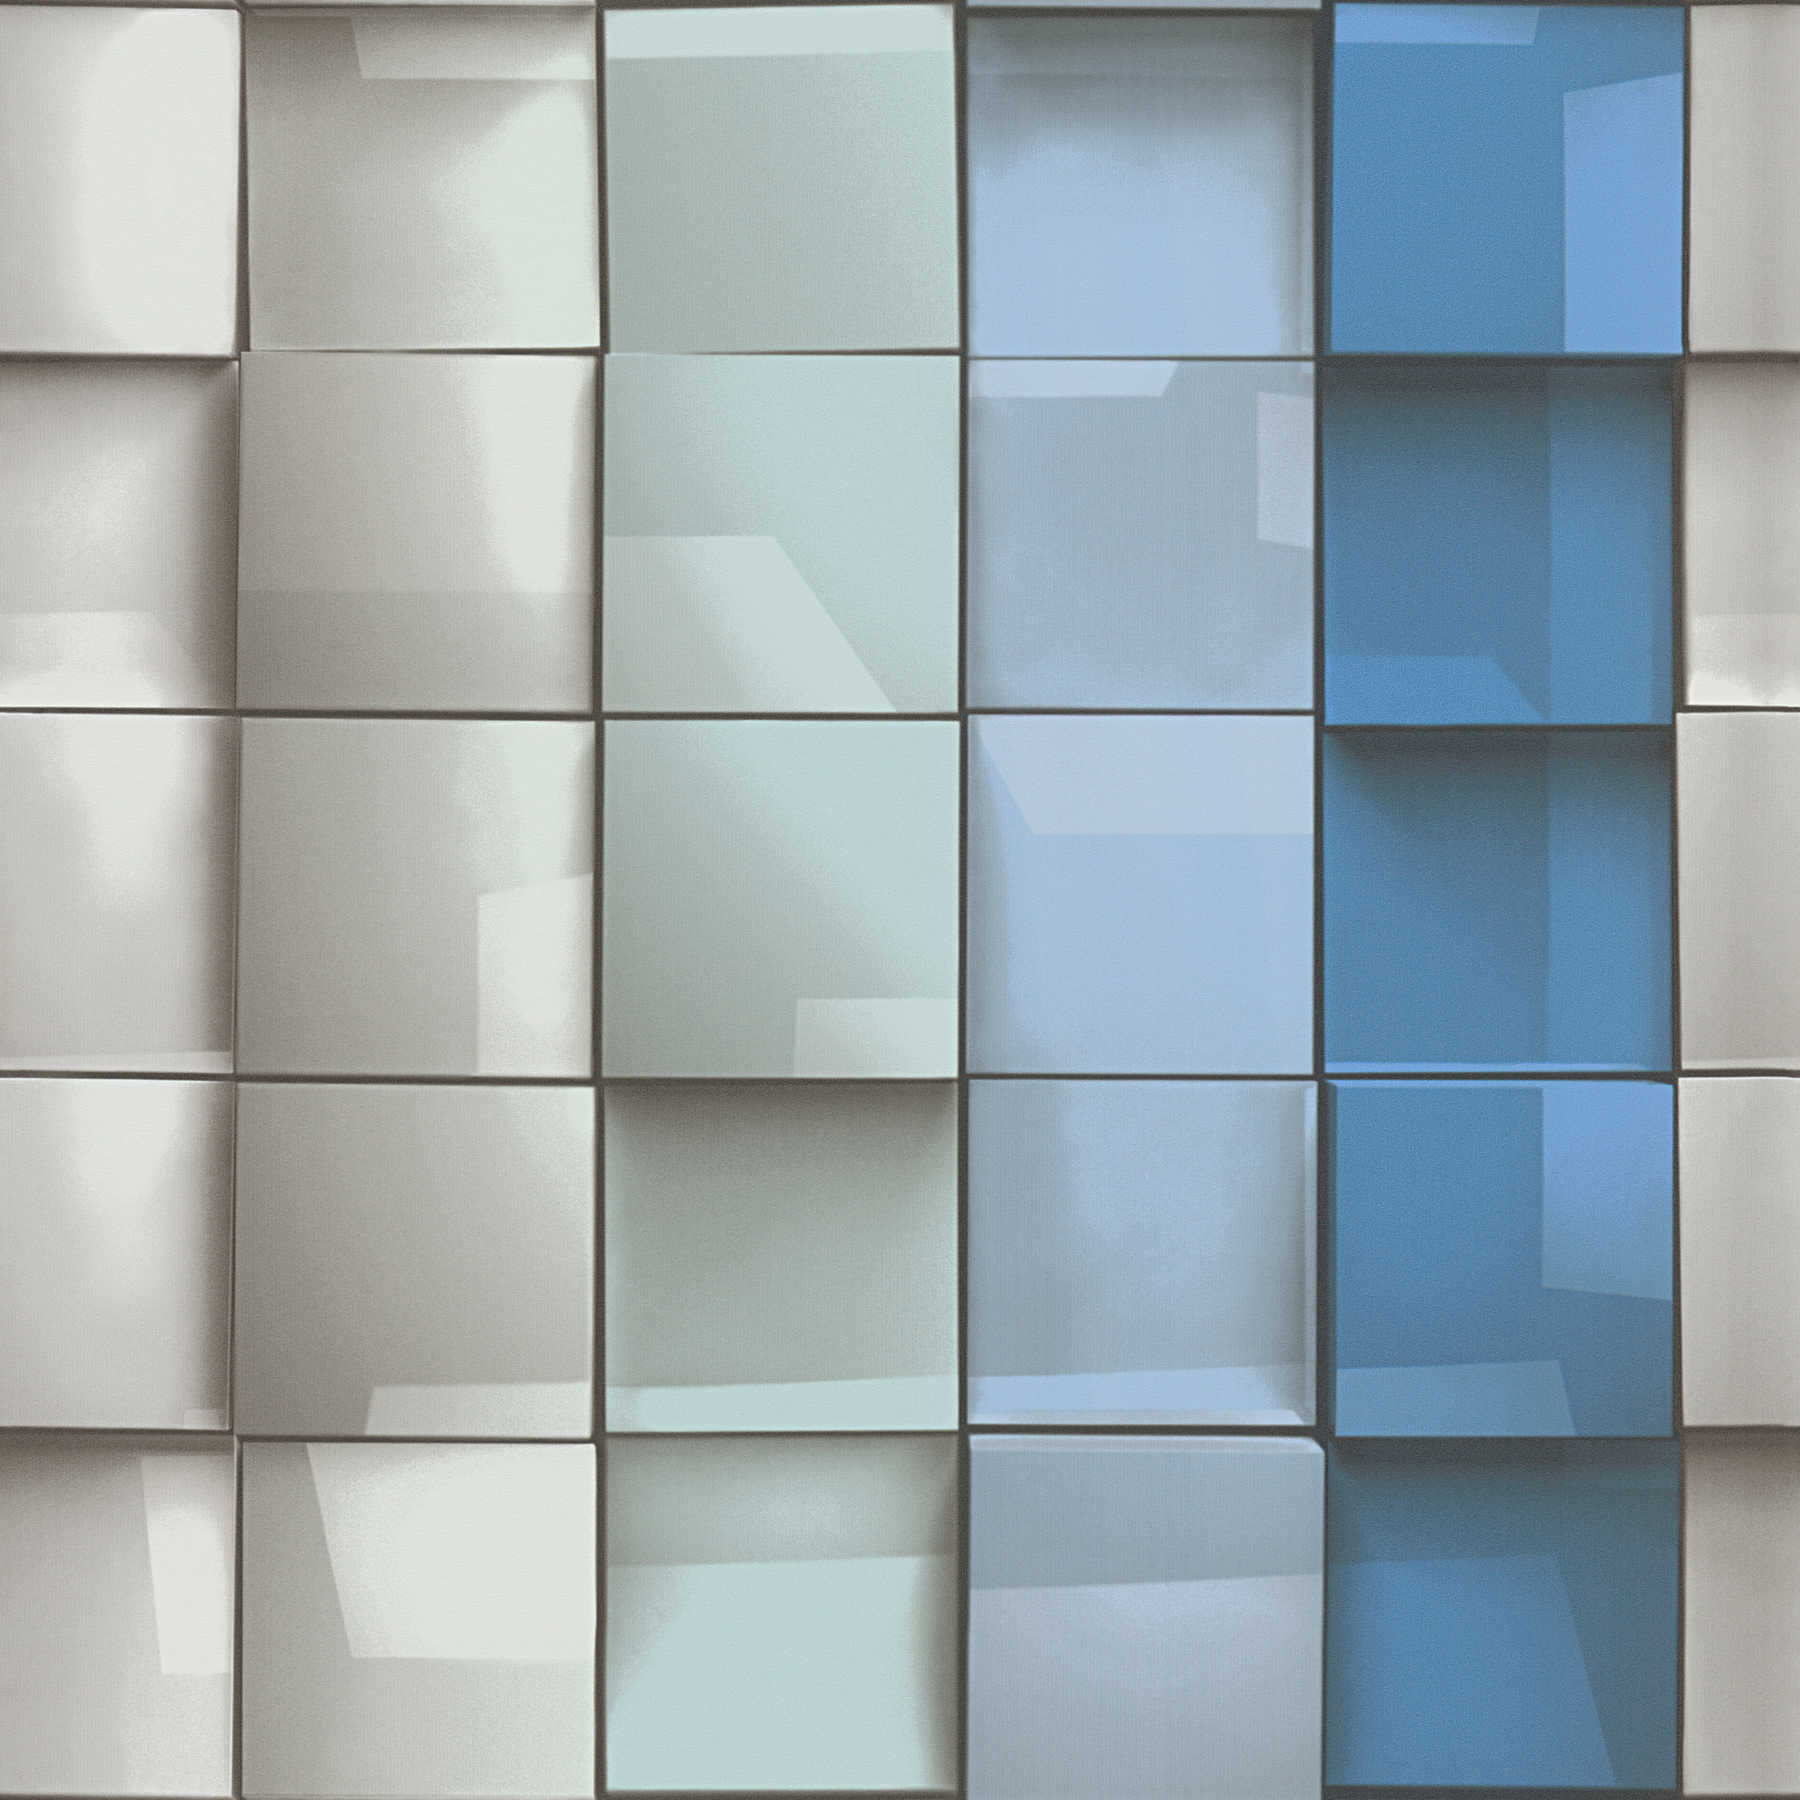 3D wallpaper with cuboid motif - blue, grey, green
